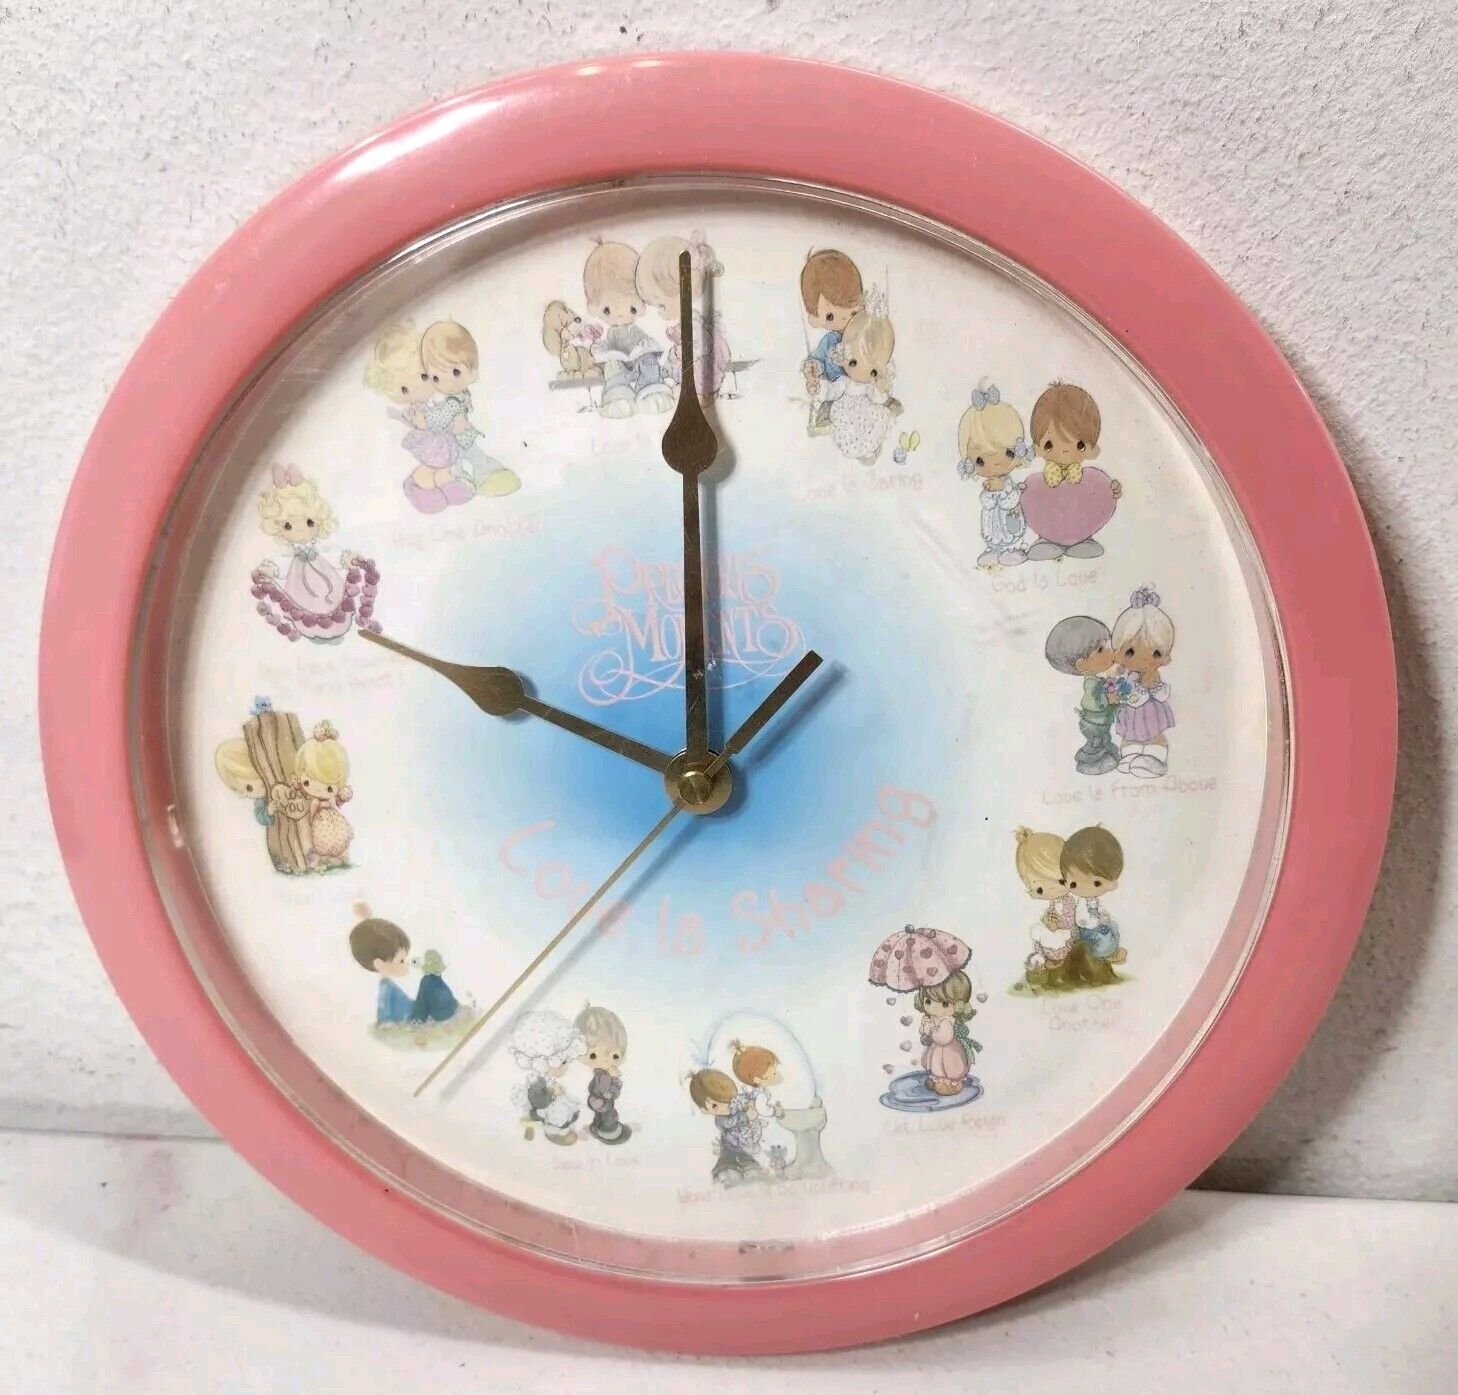 Precious Moments Love Is Sharing Wall Clock 10” Pink Kids Room Decor